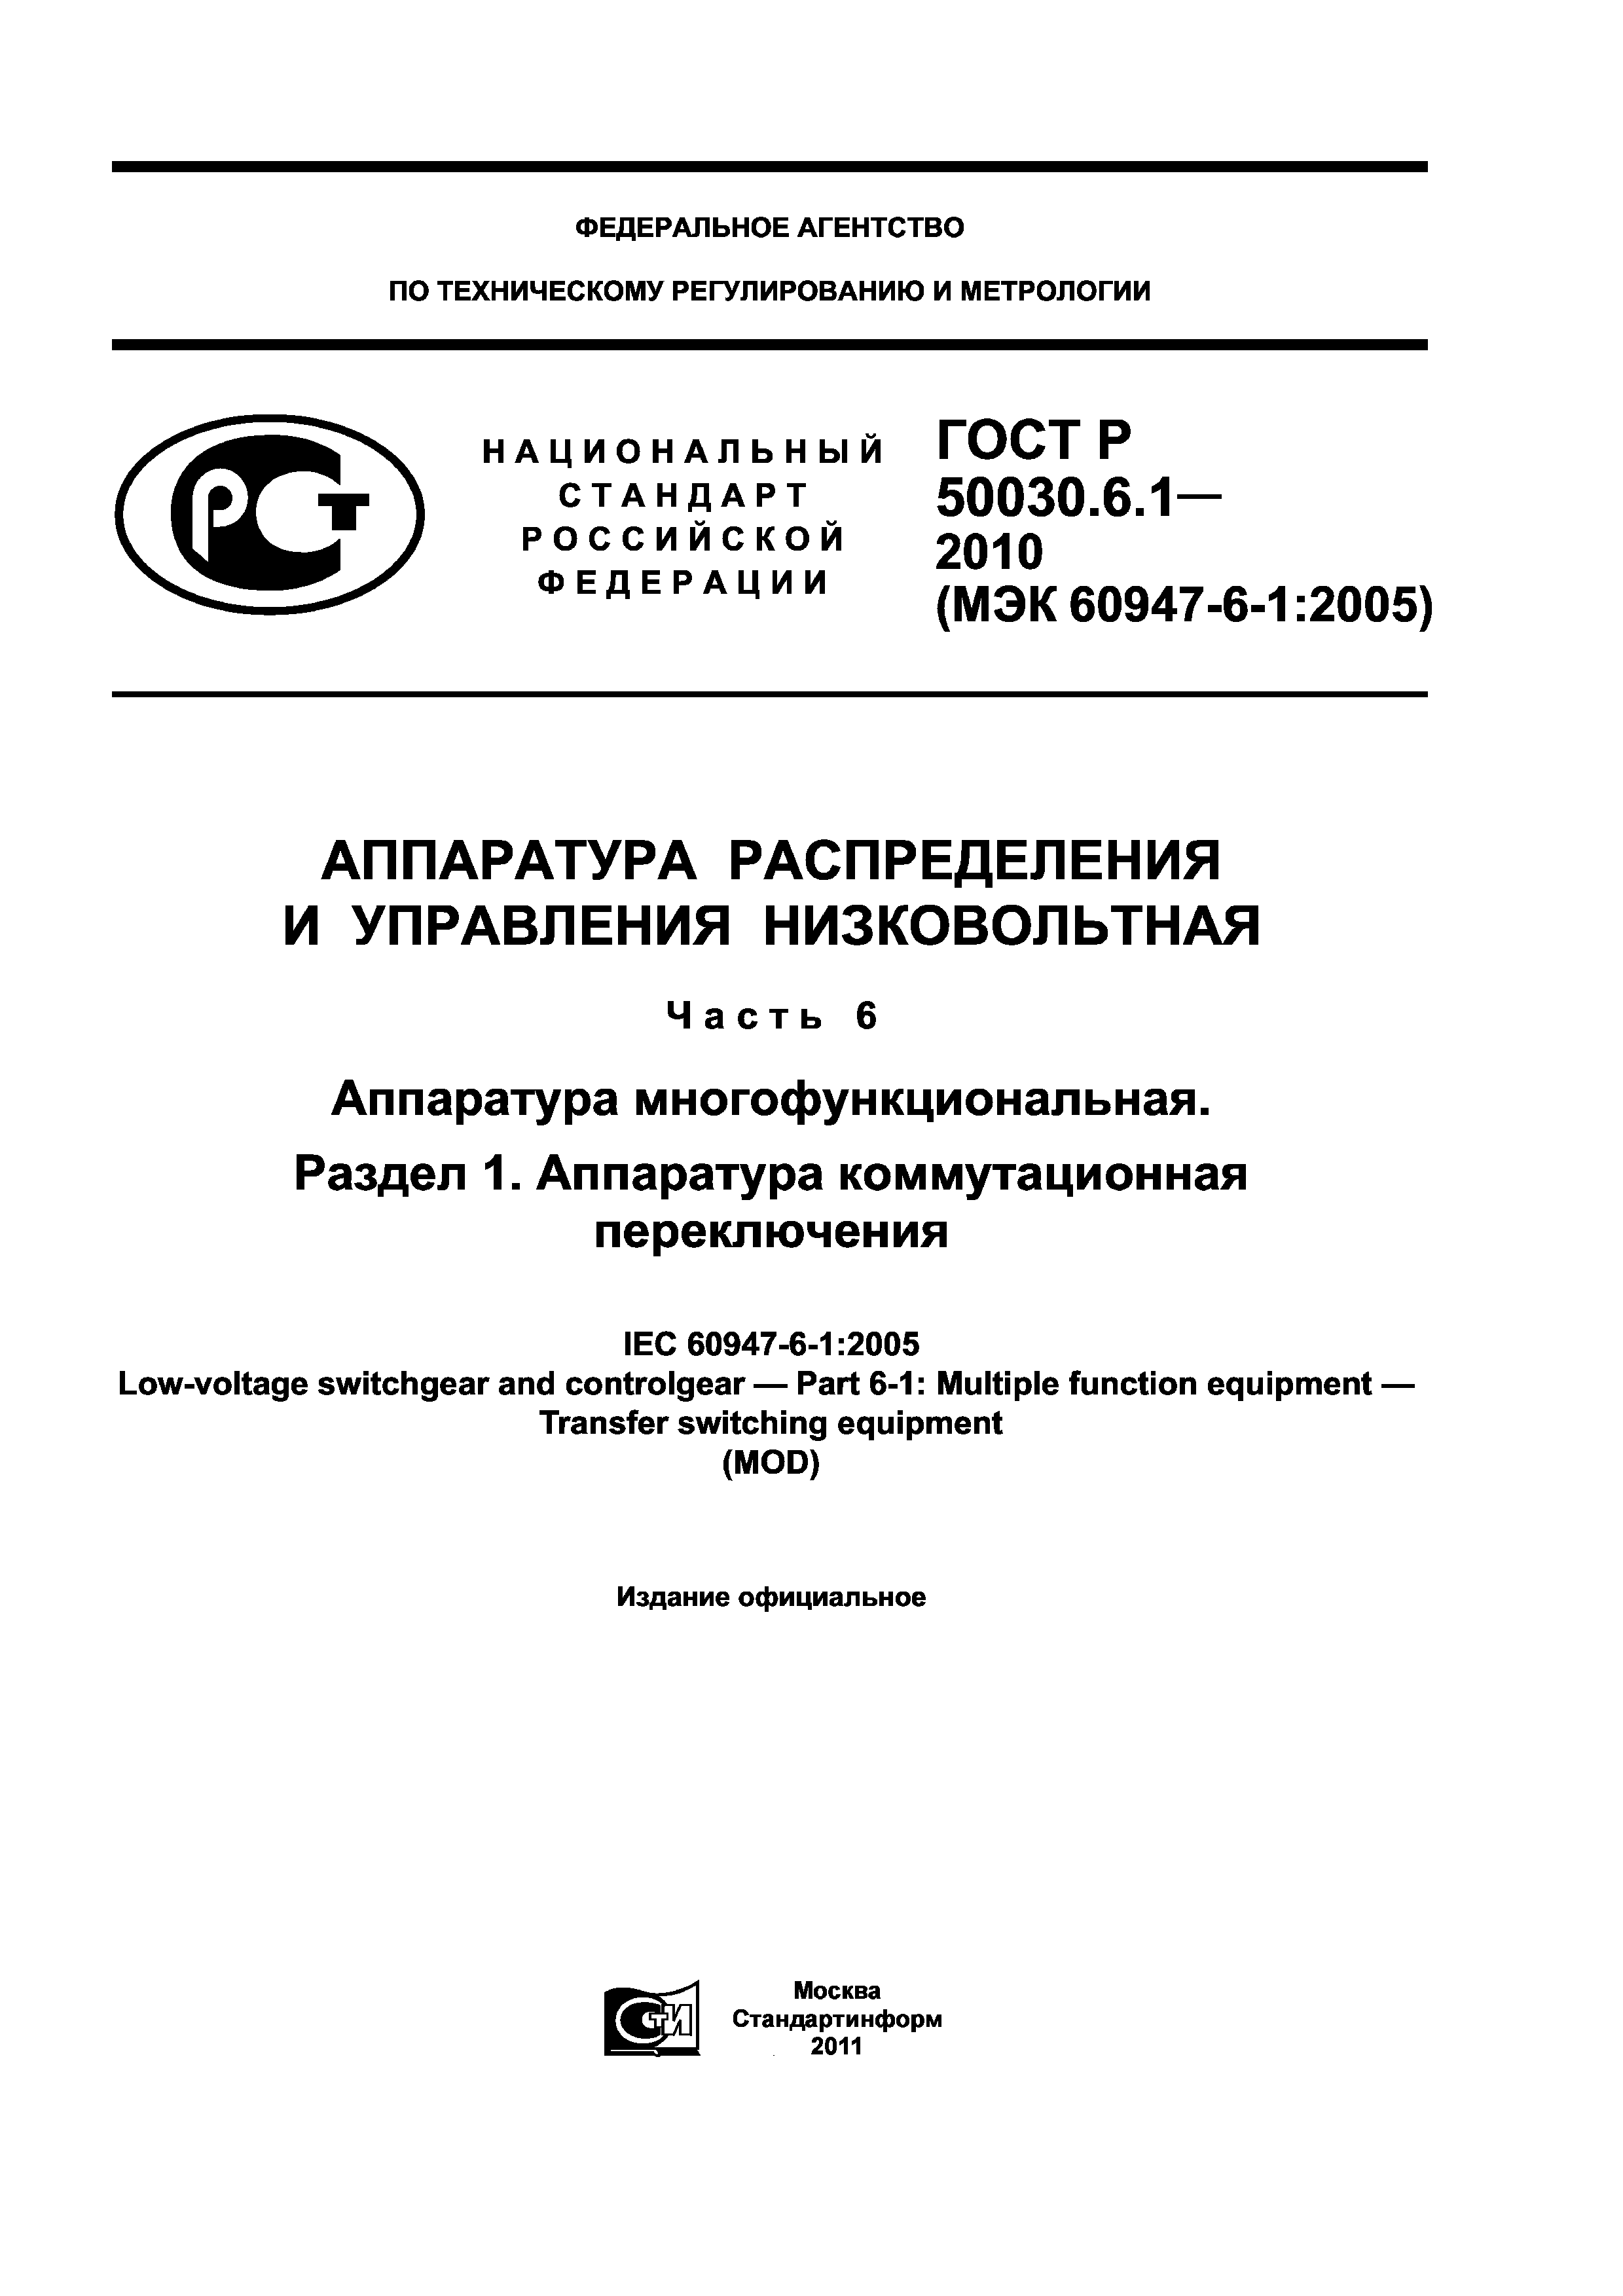 ГОСТ Р 50030.6.1-2010